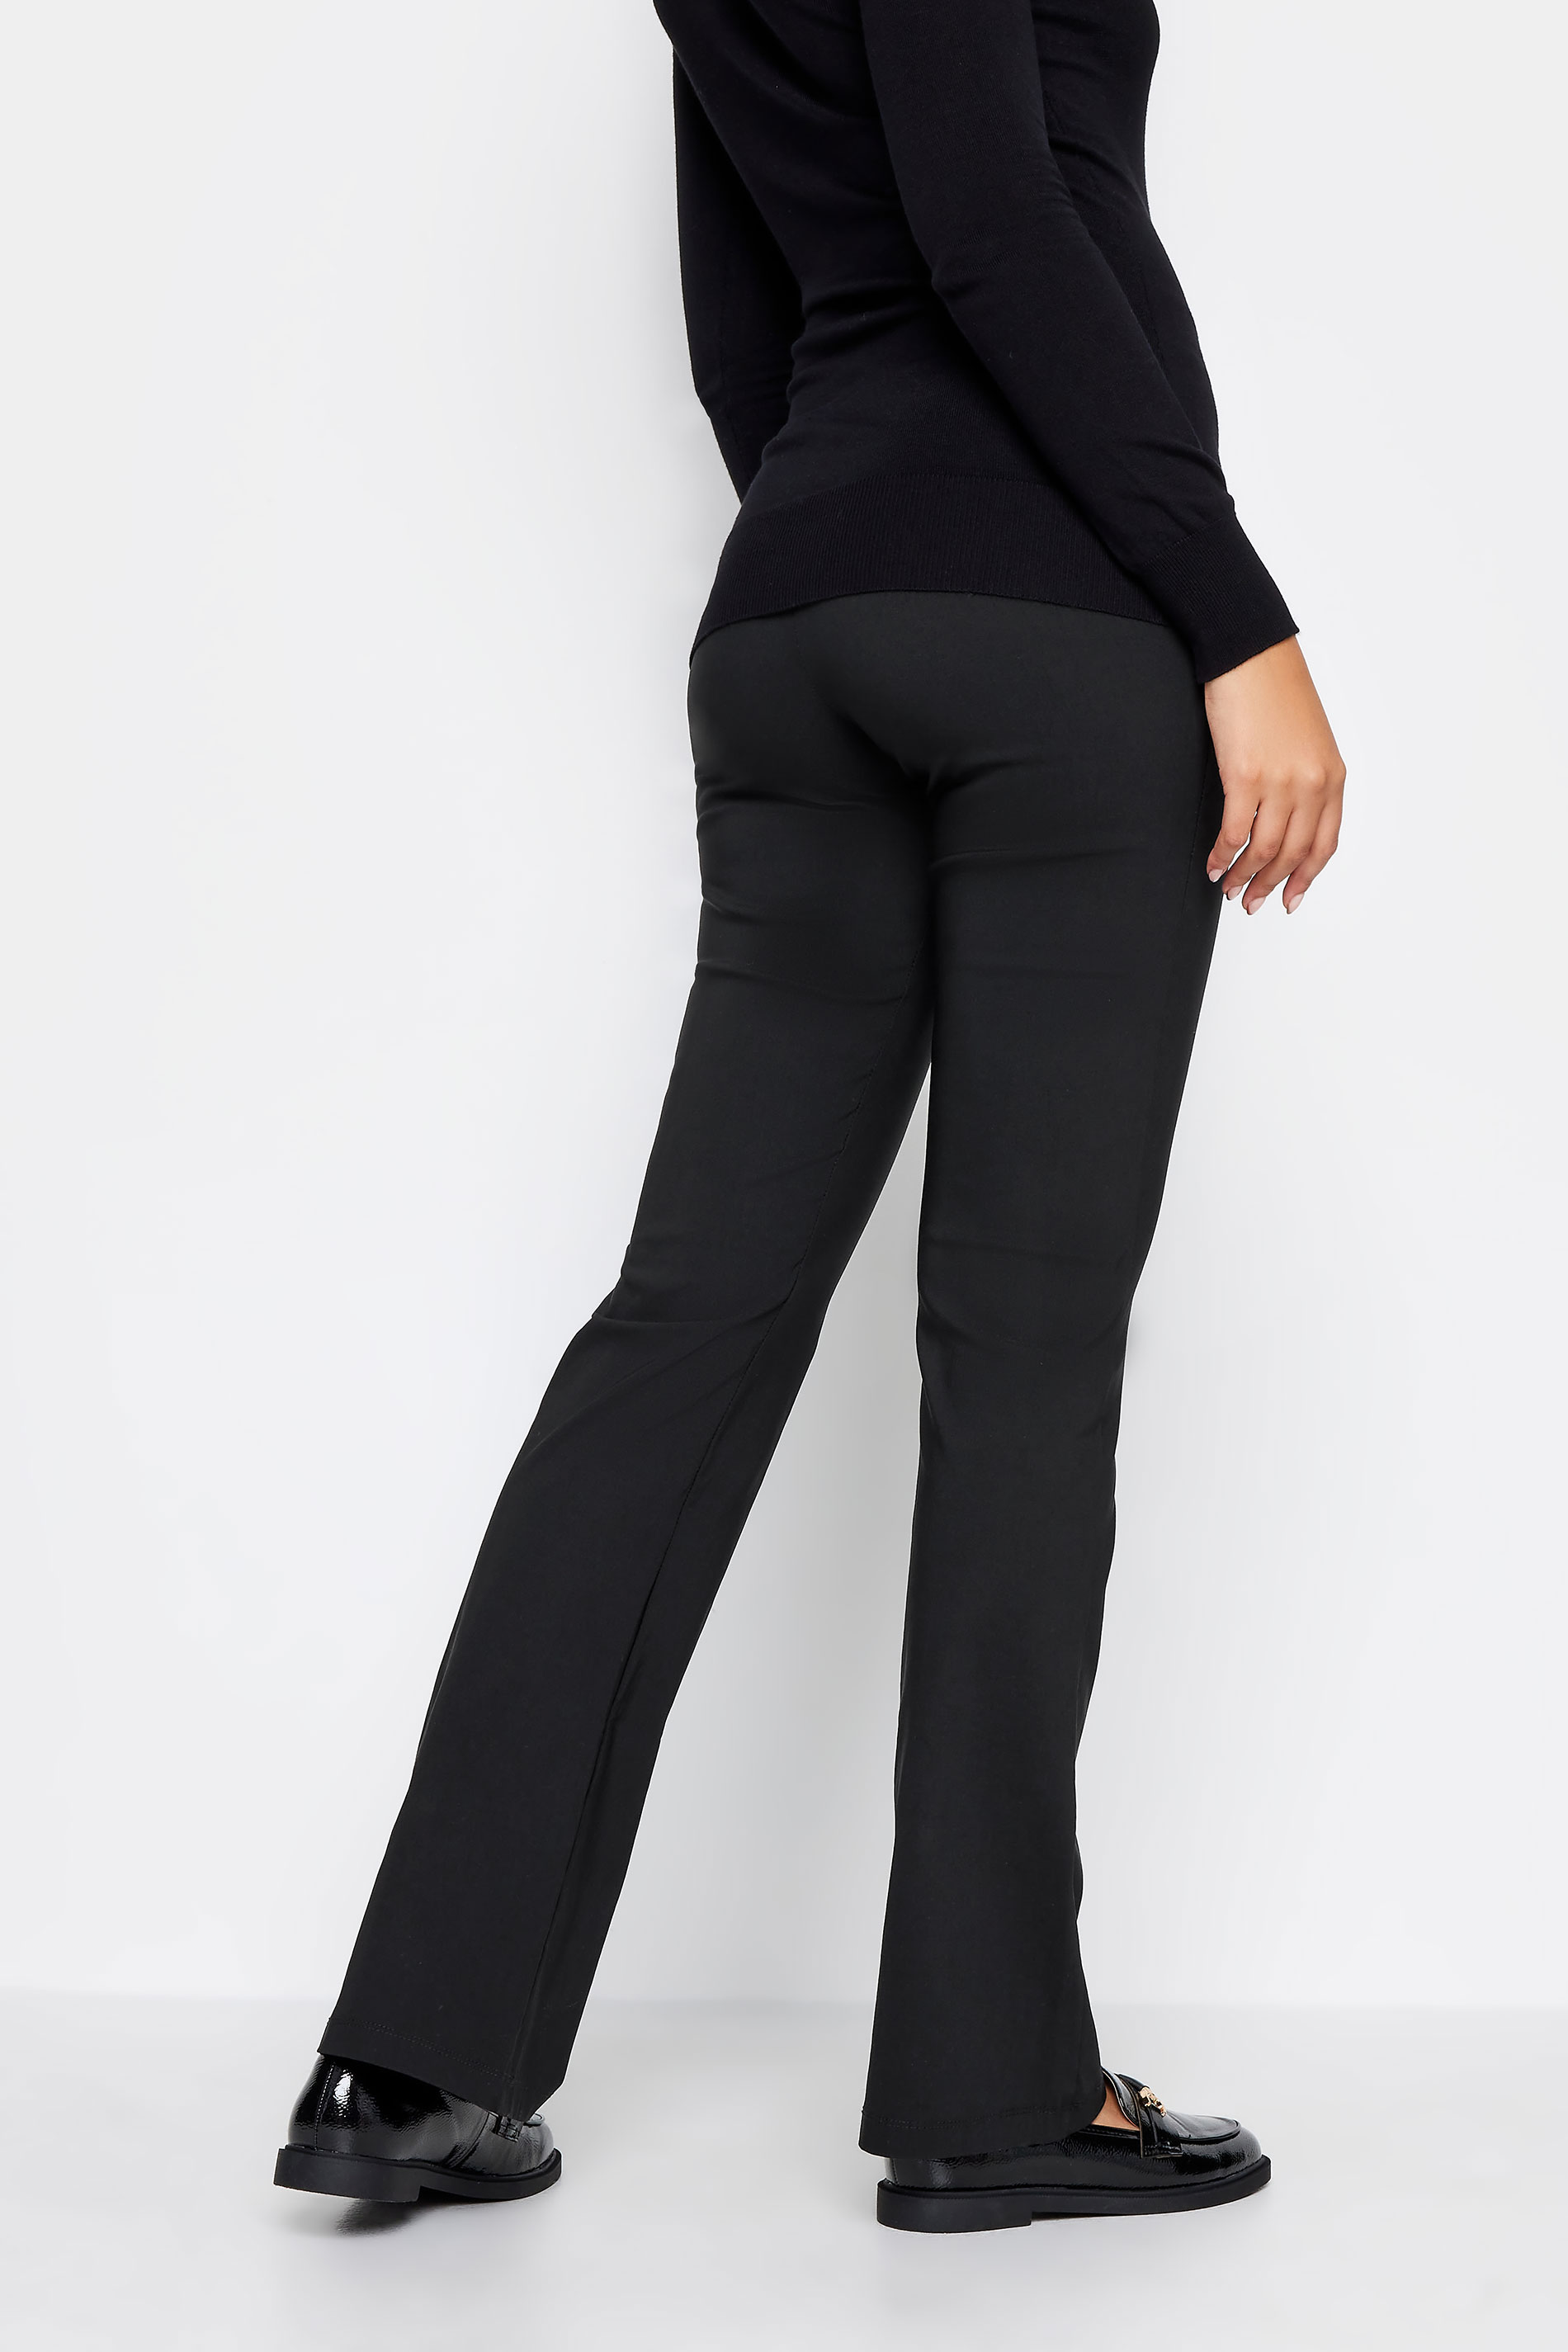 Tall Women's LTS Black Stretch Bootcut Trousers | Long Tall Sally 3